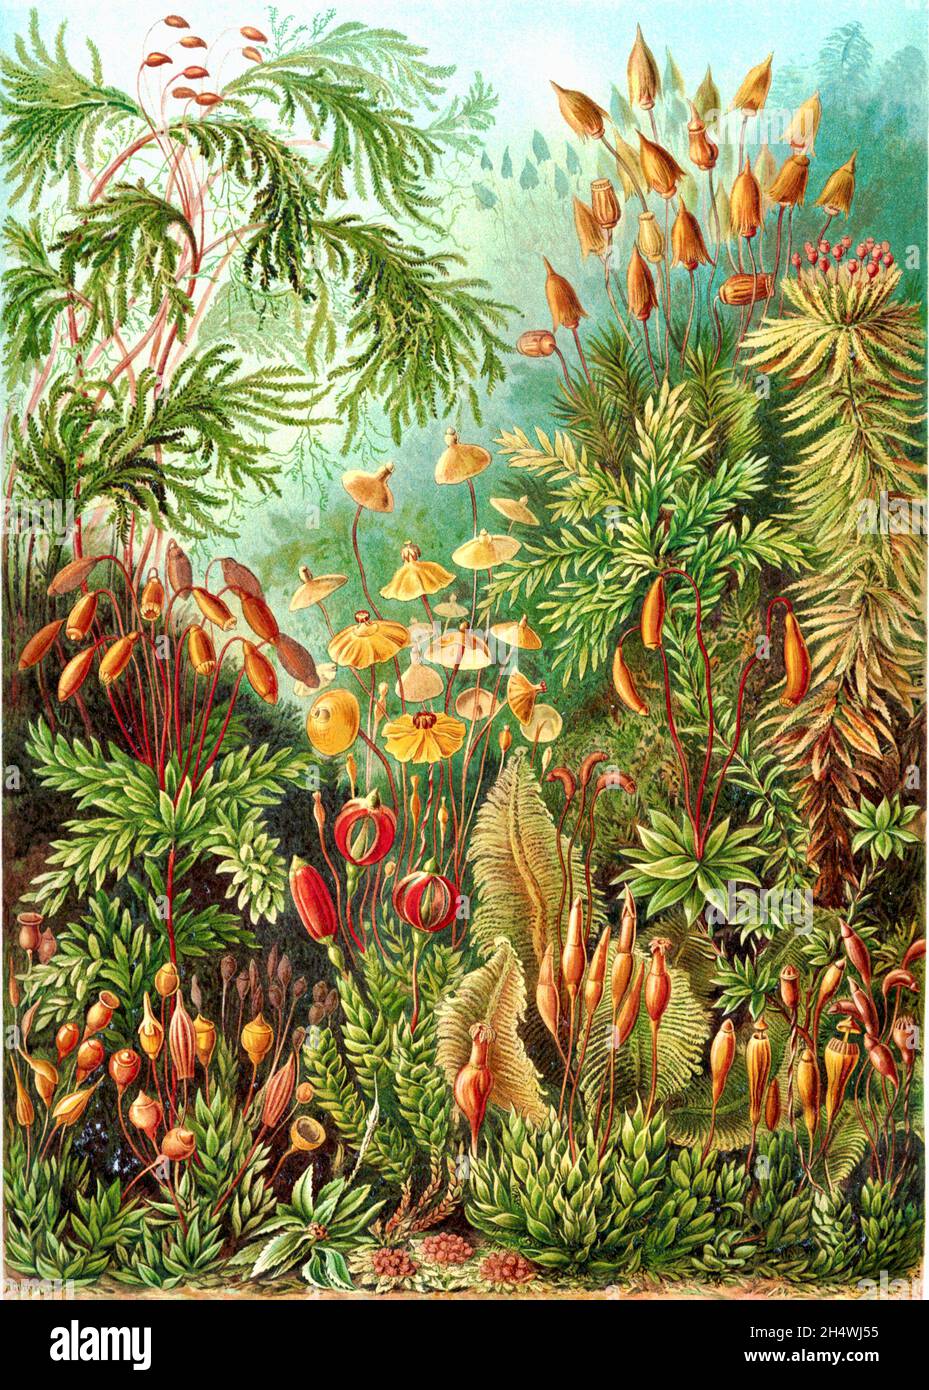 Ernst Haeckel - Muscinae - 1904 - Bryophyta - Mosses Stockfoto